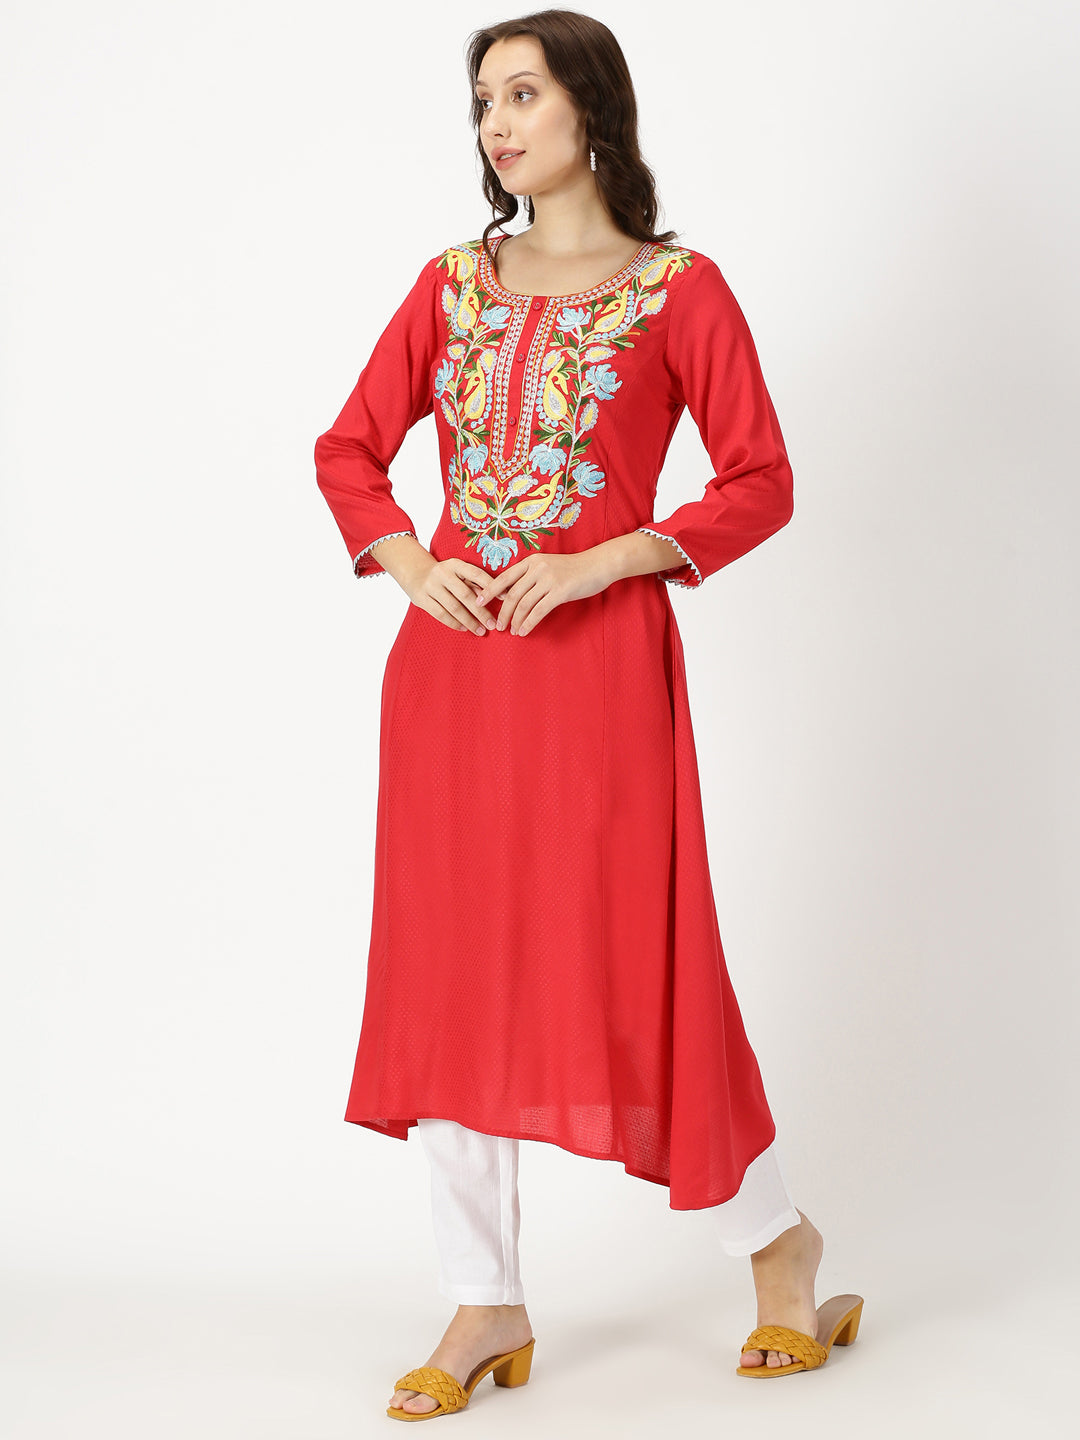 Maroon Colour Combination For Punjabi Suits/Dresses/Kurtis|| Colour  Contrast For Punjabi Suit 2020 - YouTube